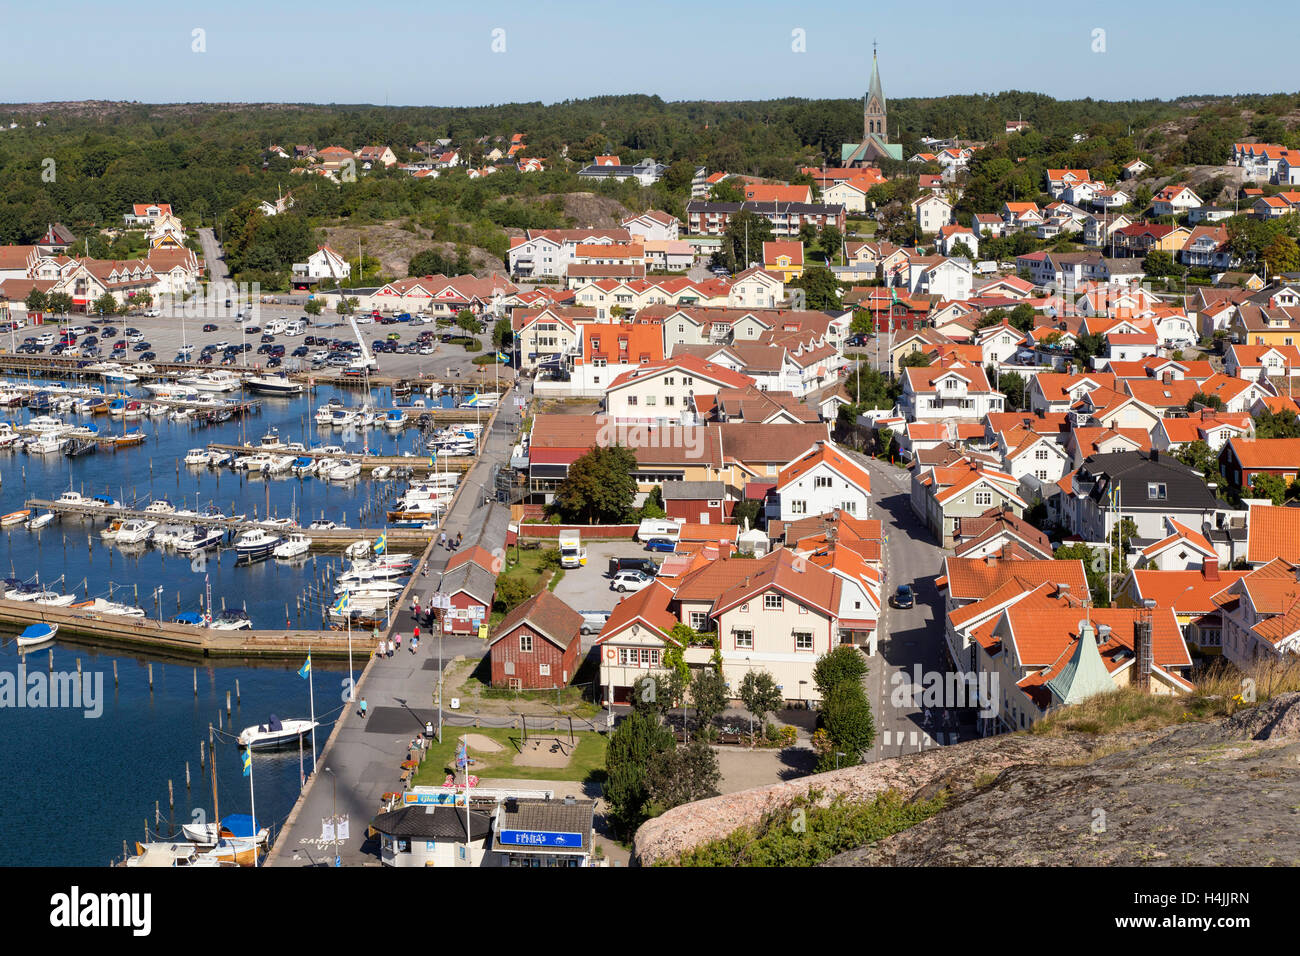 Houses, guest marina, Grebbestad, Bohuslän, West Sweden, Sweden Stock Photo